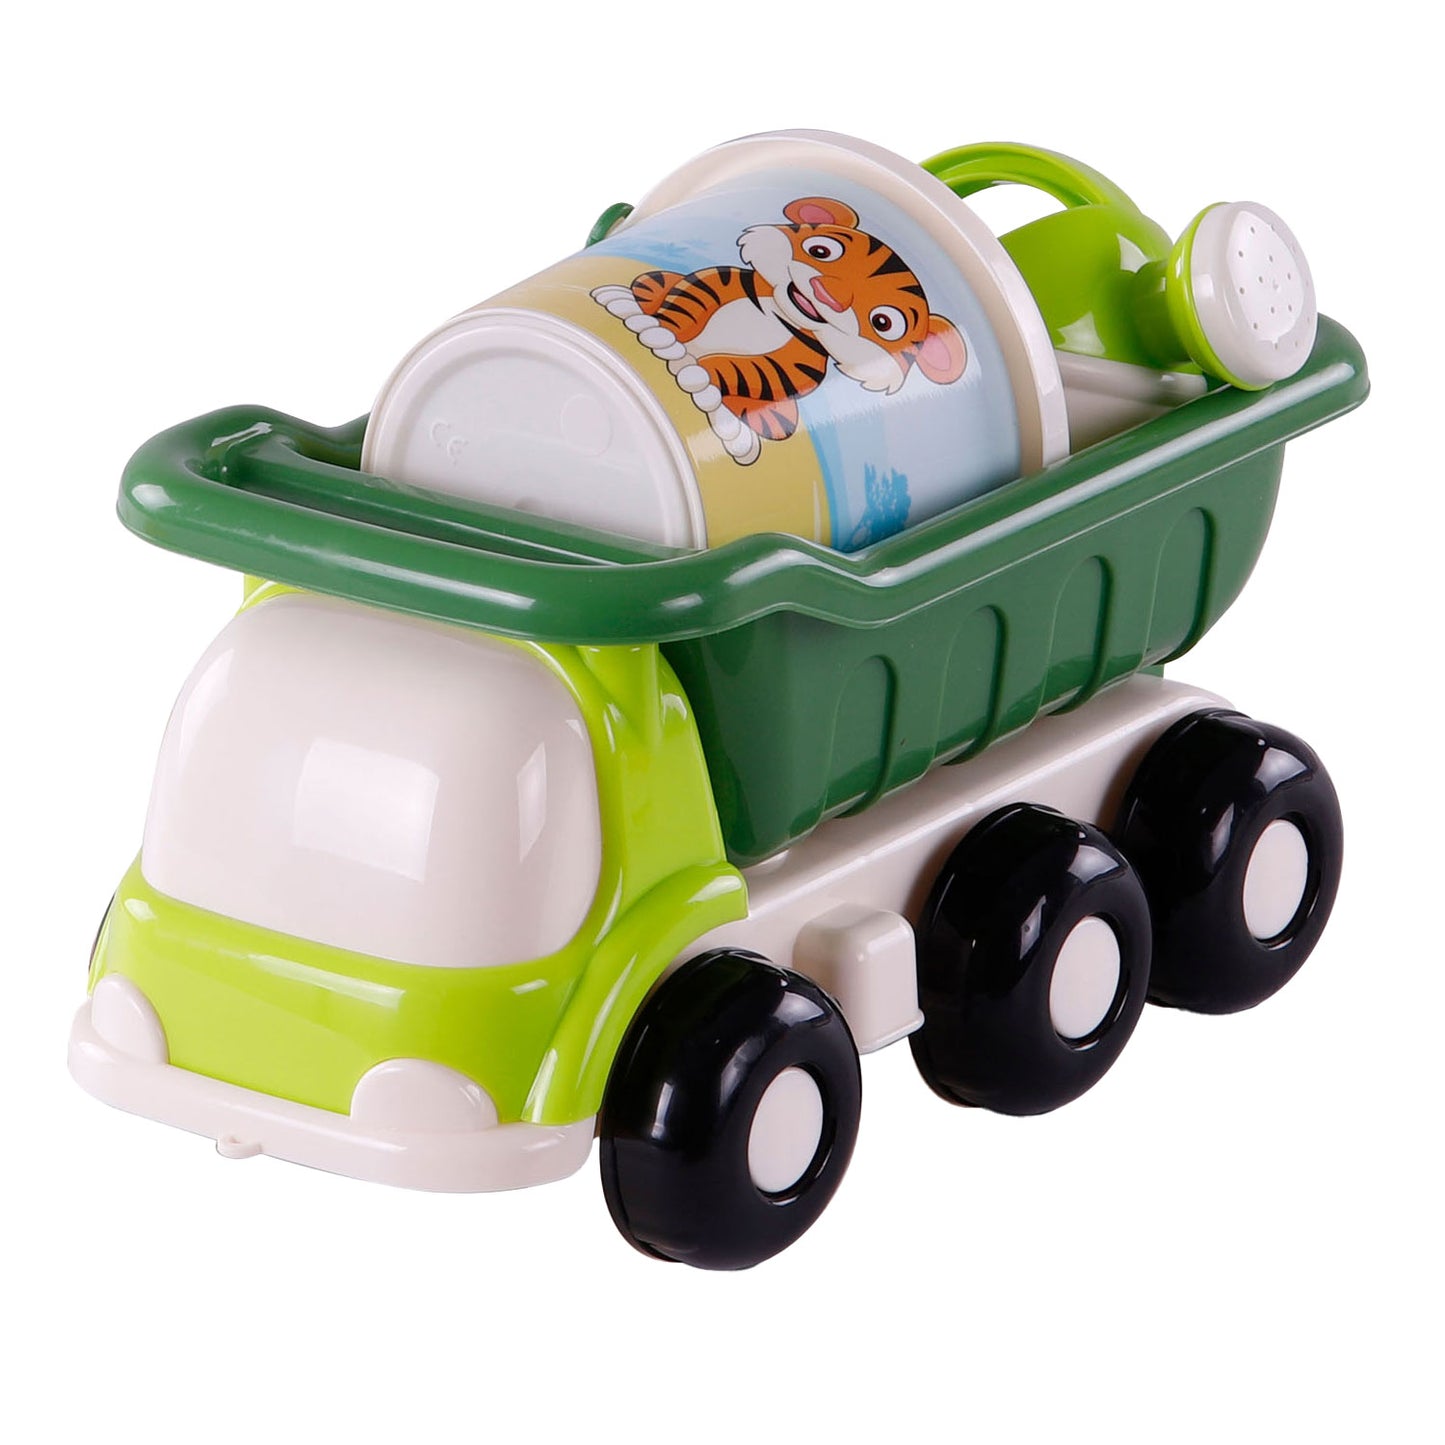 Cavallino Toys Cavallino Beach Kiepwagen con set set verde, 5dlg.